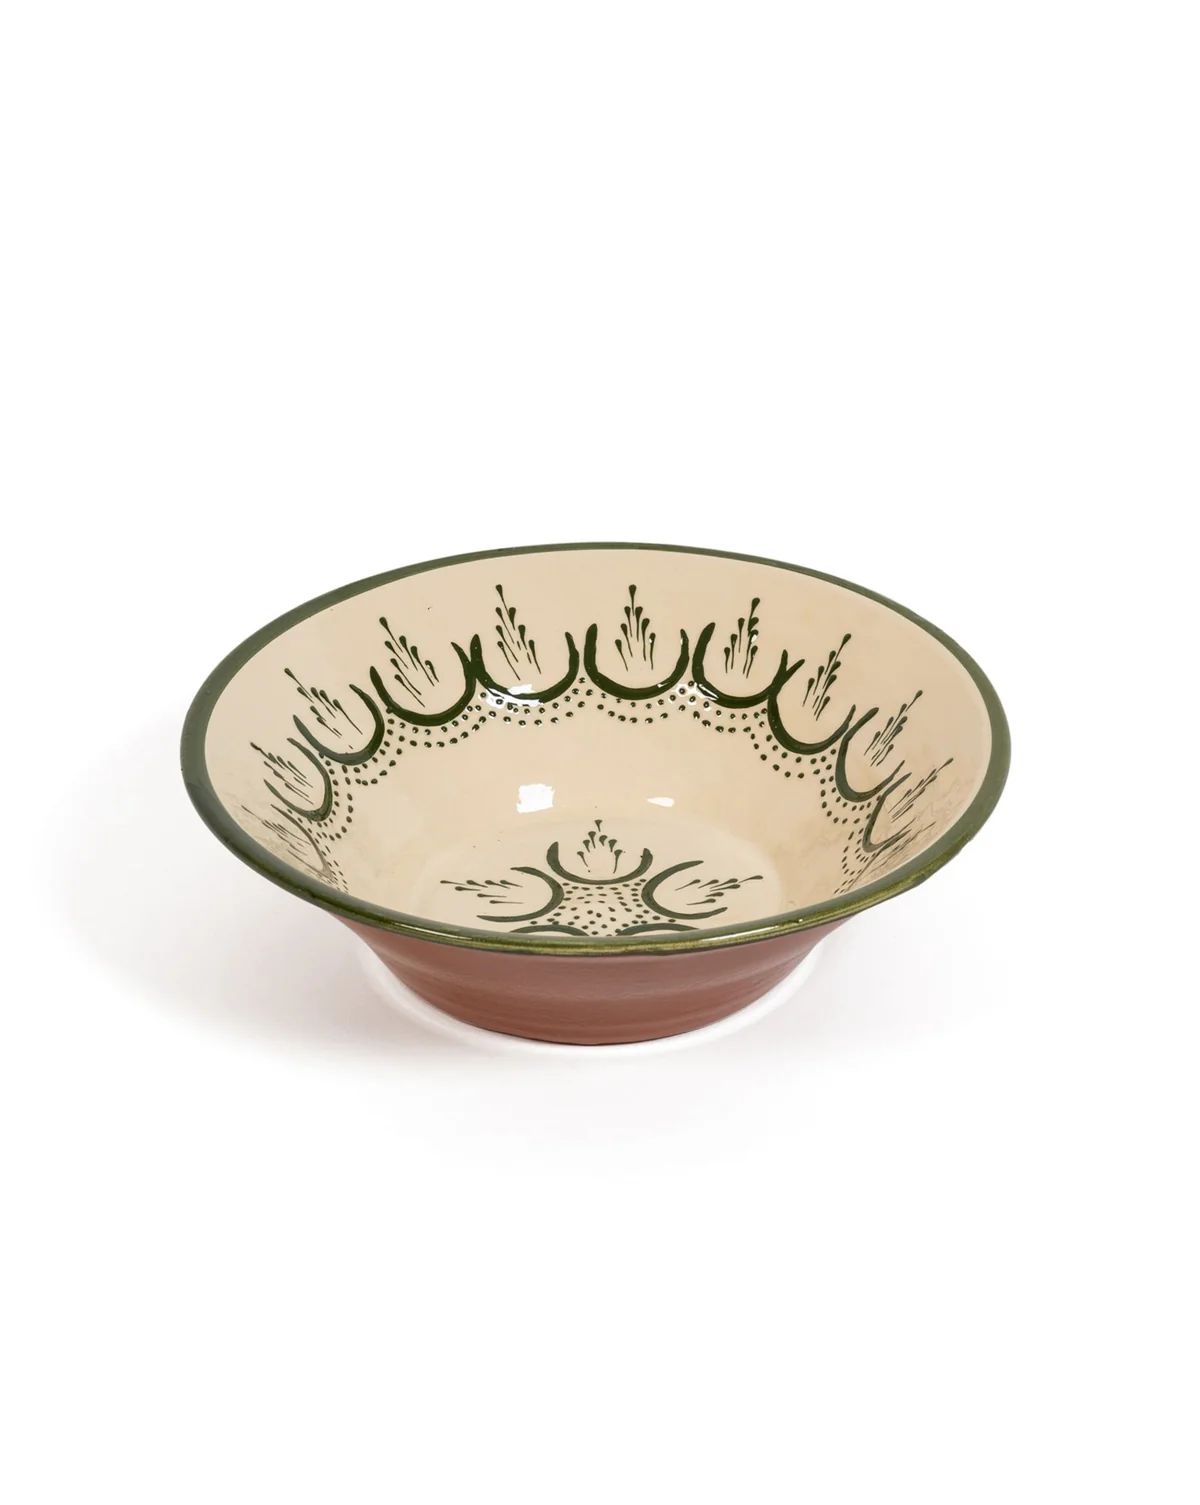 Pintora large bowl | Sharland England